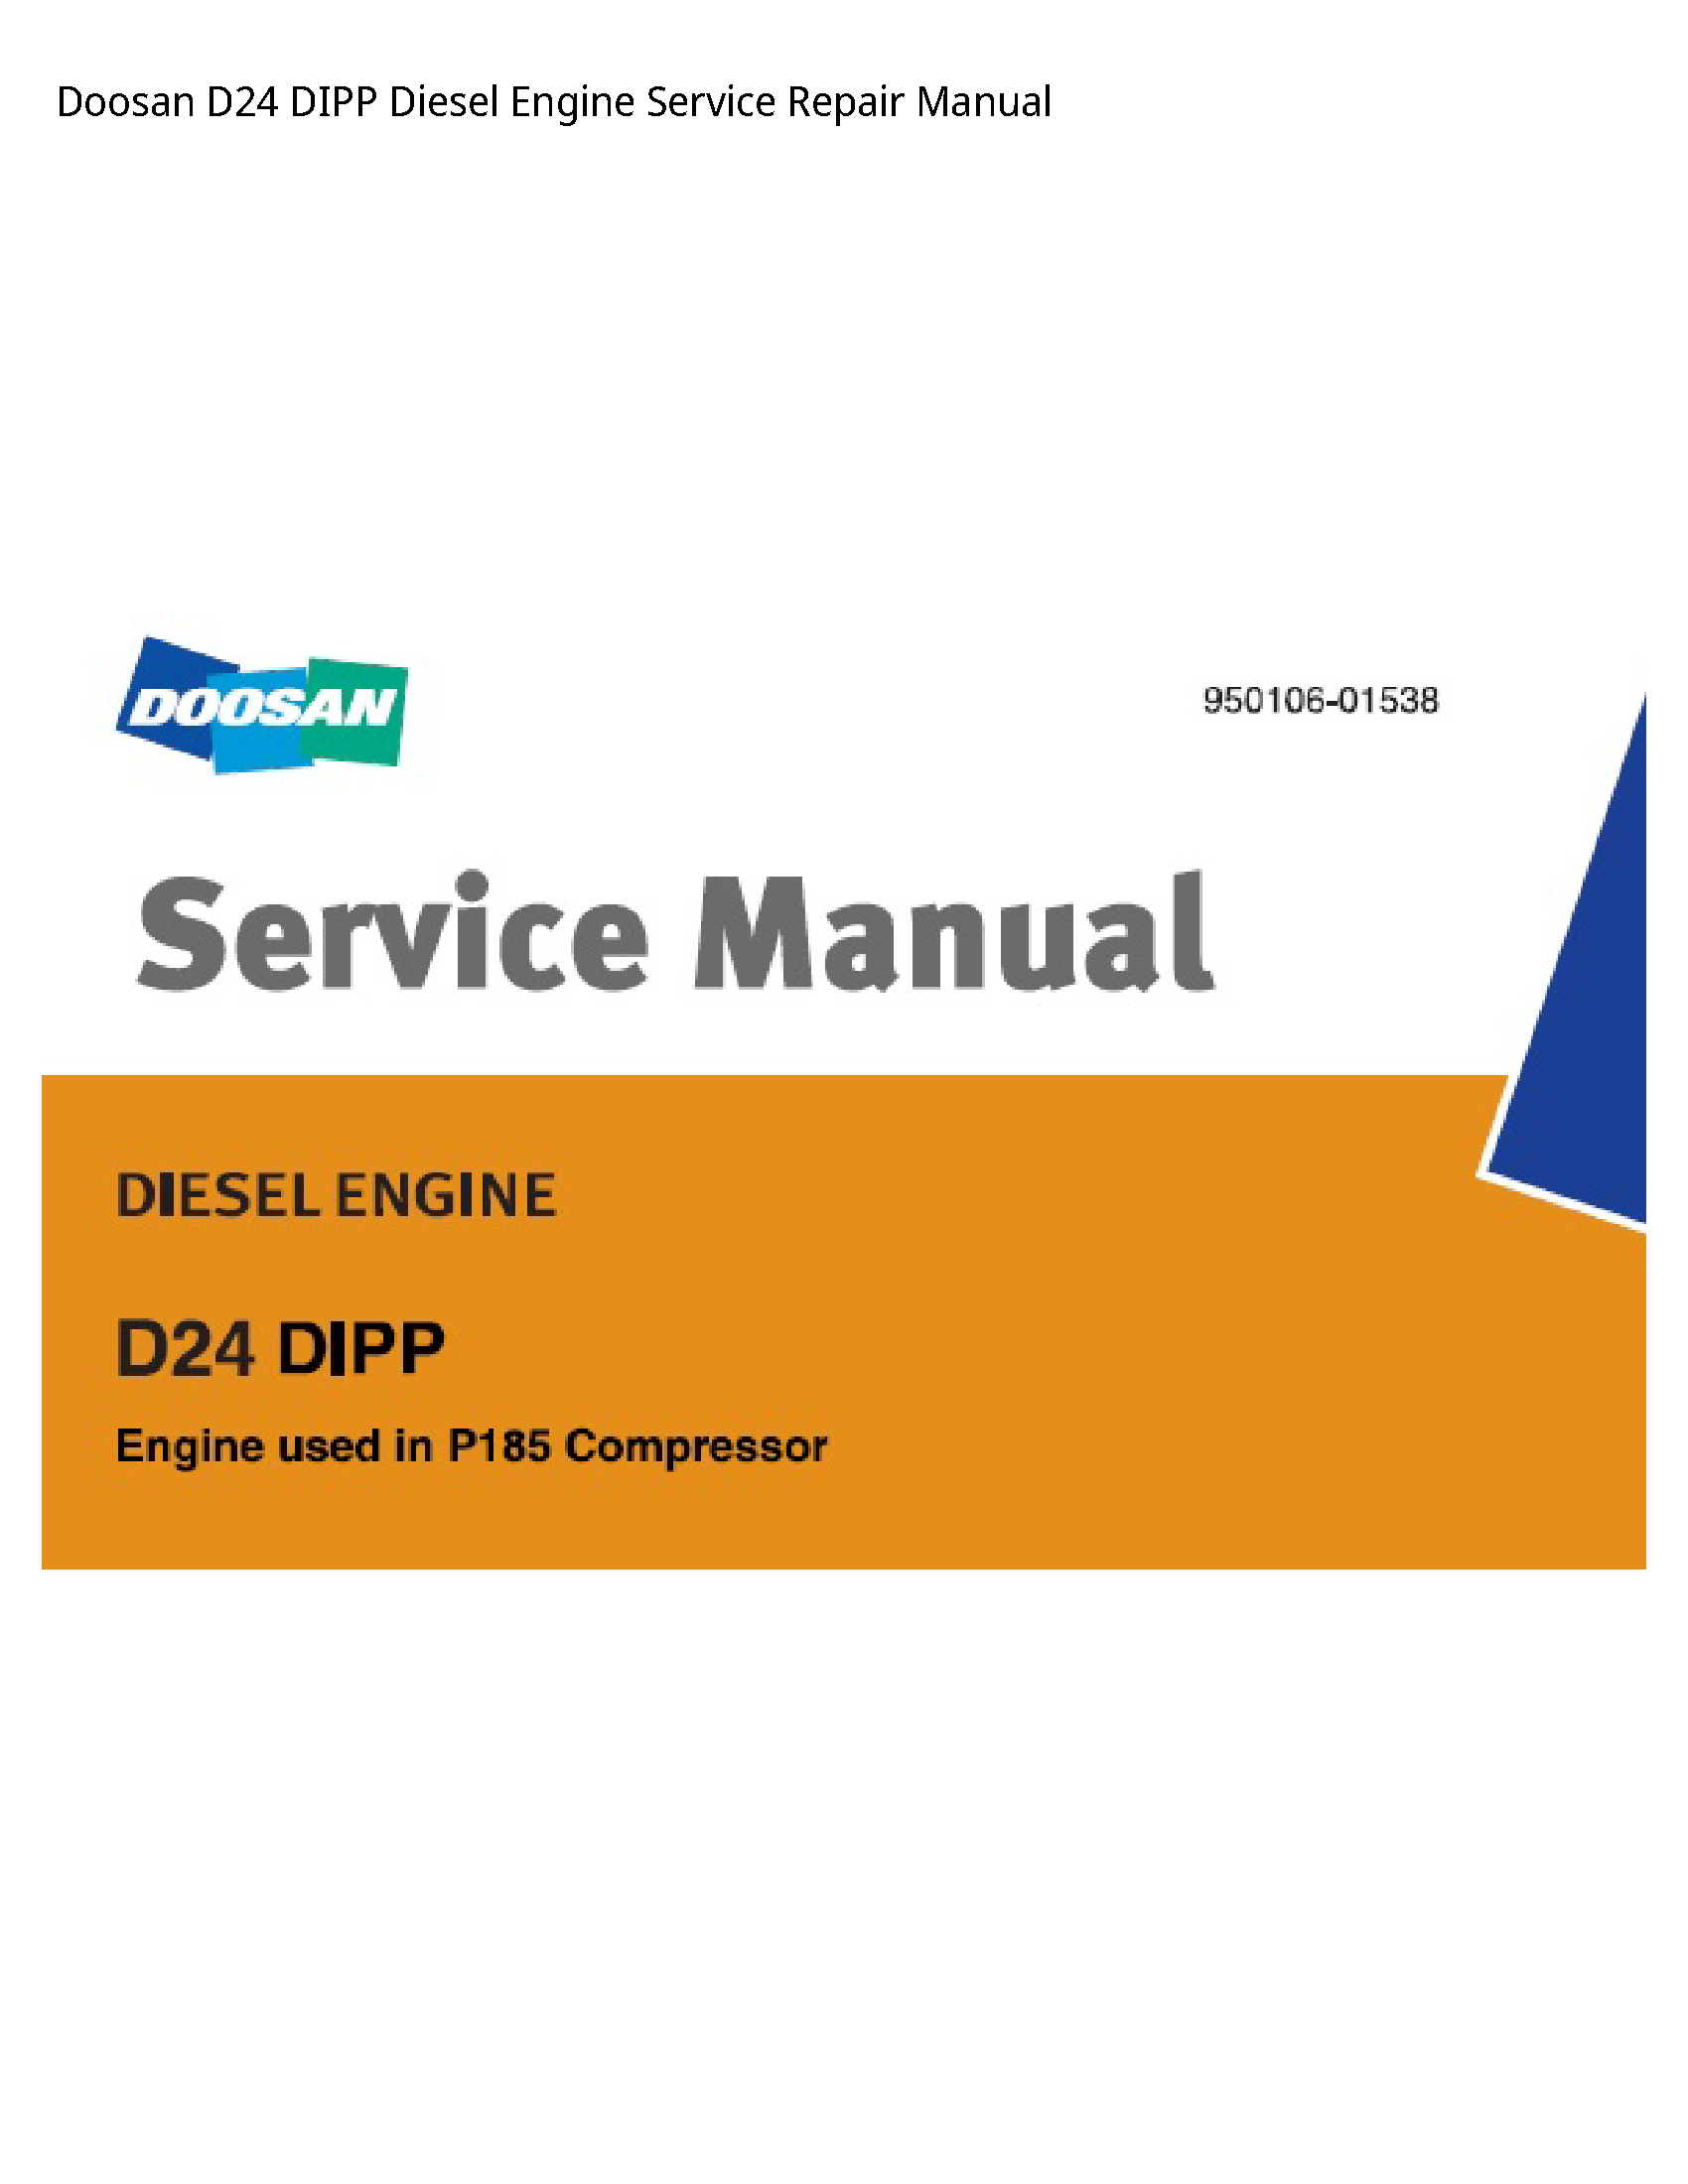 Doosan D24 DIPP Diesel Engine manual